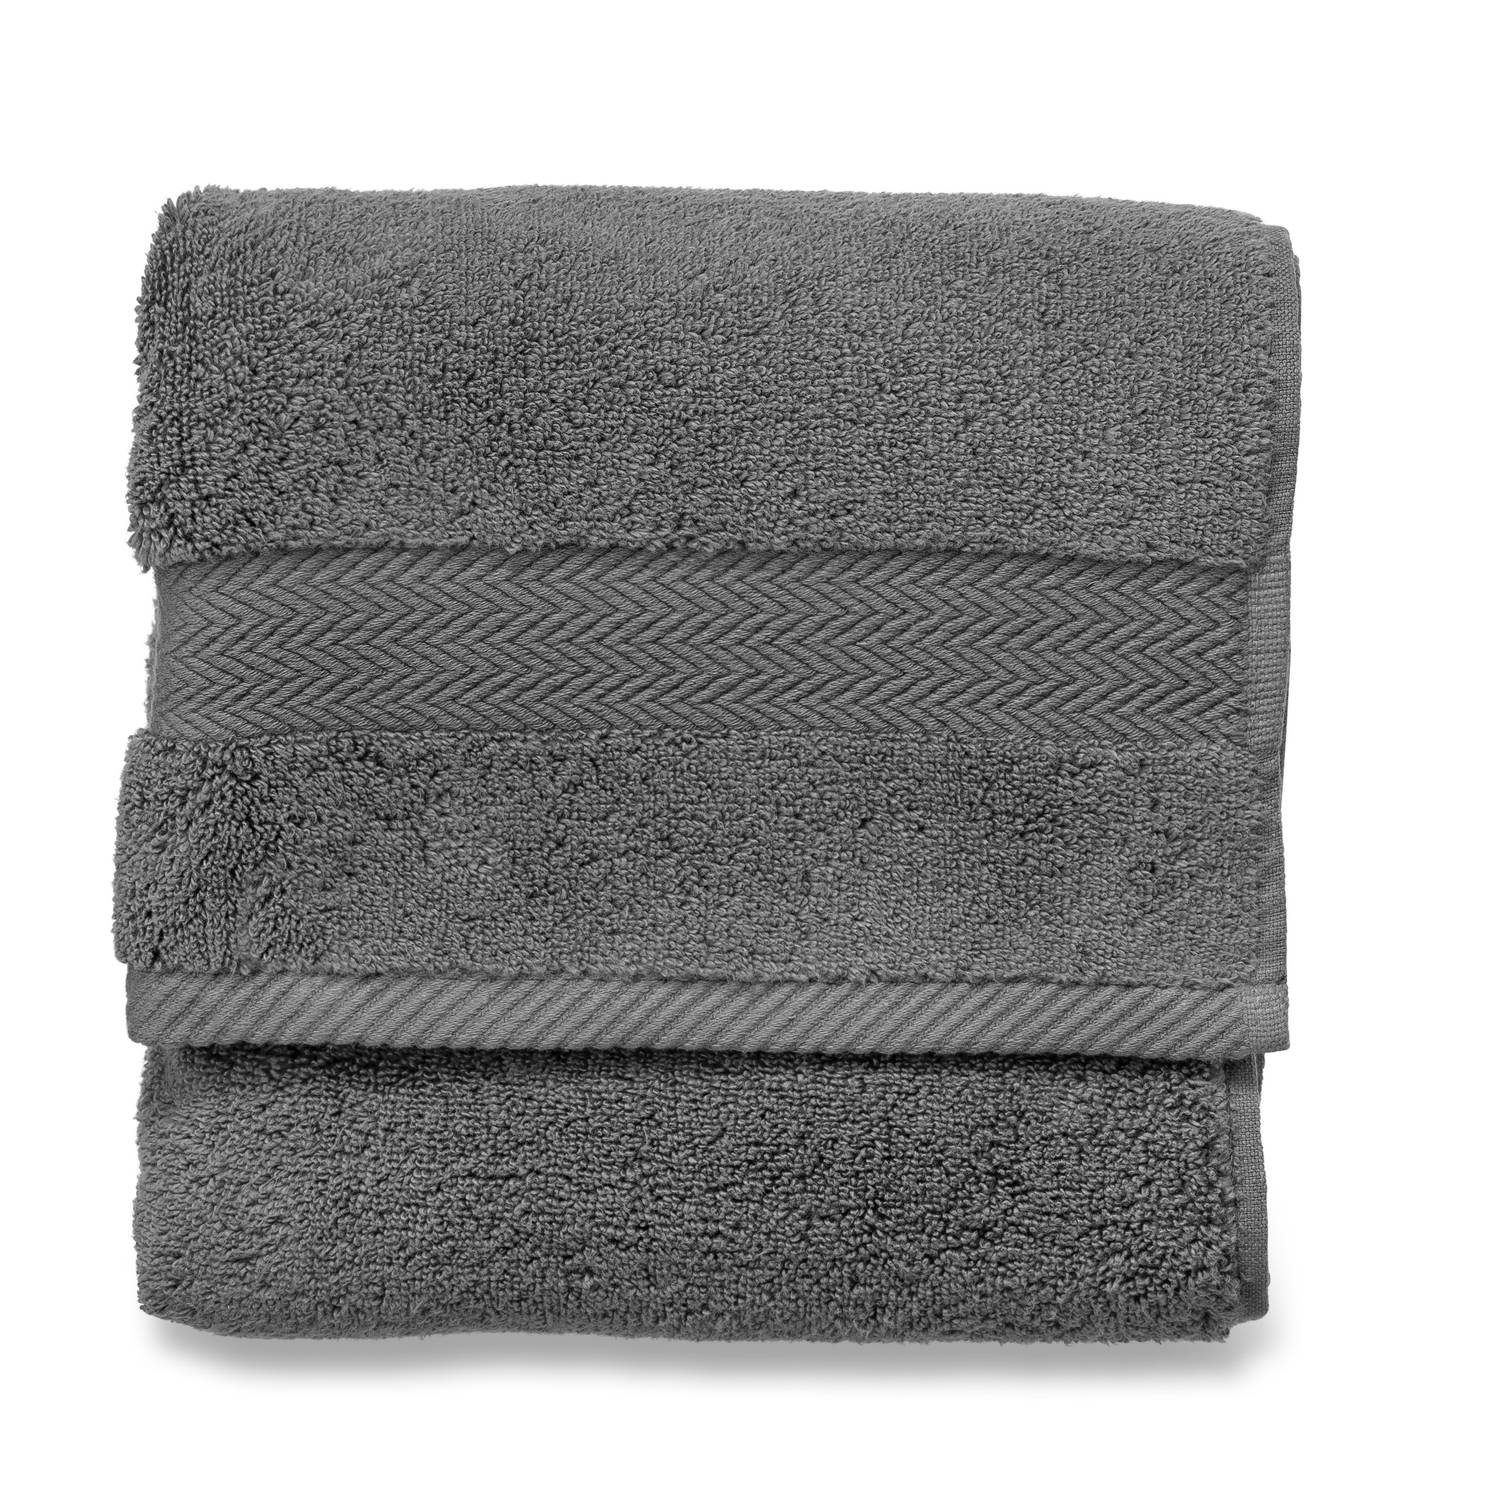 Blokker handdoek 600g - - 50x100 cm | Blokker